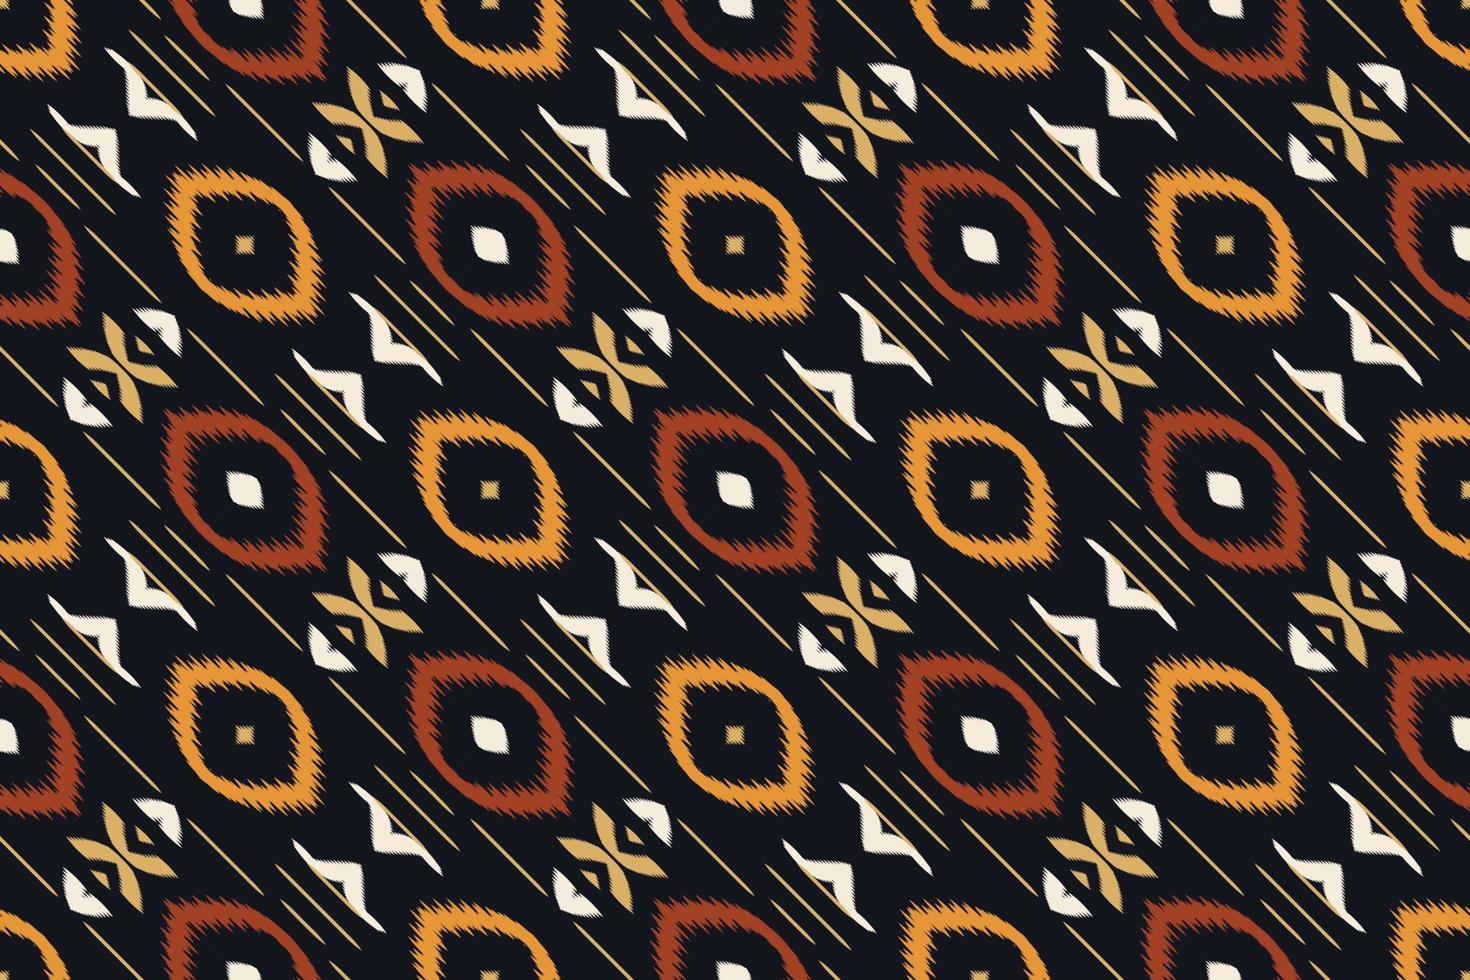 tecido ikat tribal asteca geométrico tradicional étnico oriental design para o fundo. bordado folclórico, indiano, escandinavo, cigano, mexicano, tapete africano, papel de parede. vetor